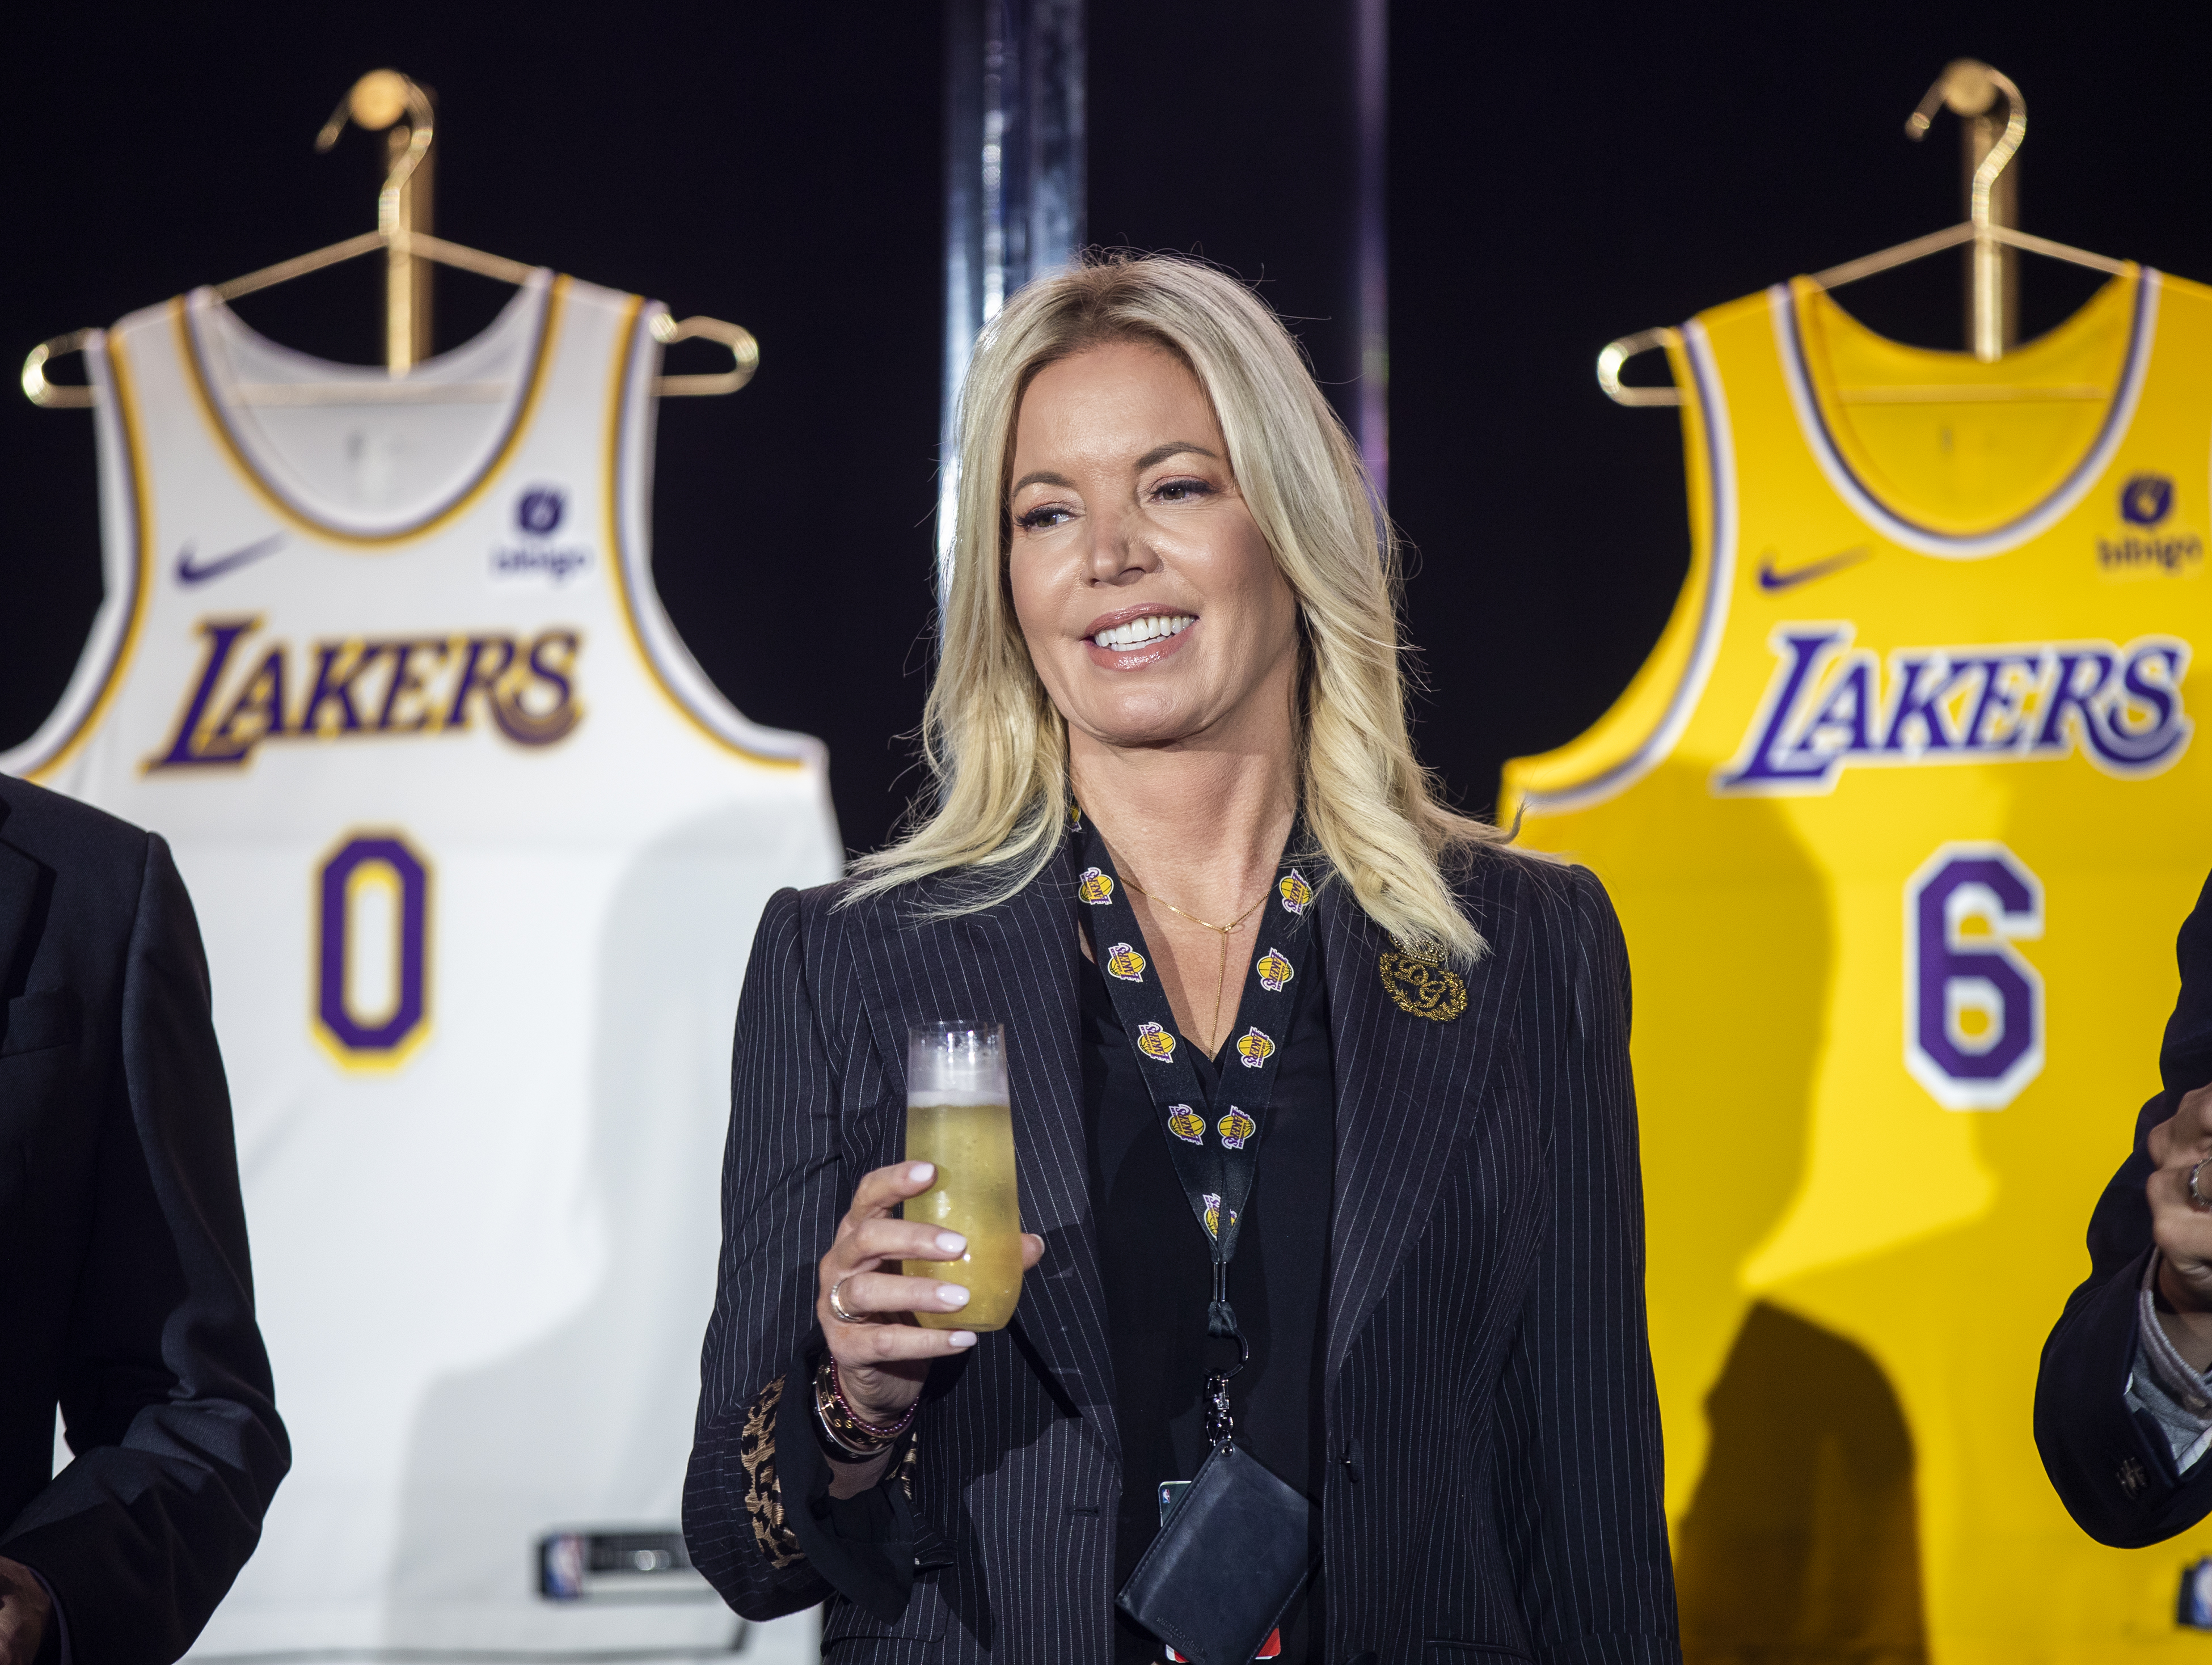 Lakers announce new marketing partnership